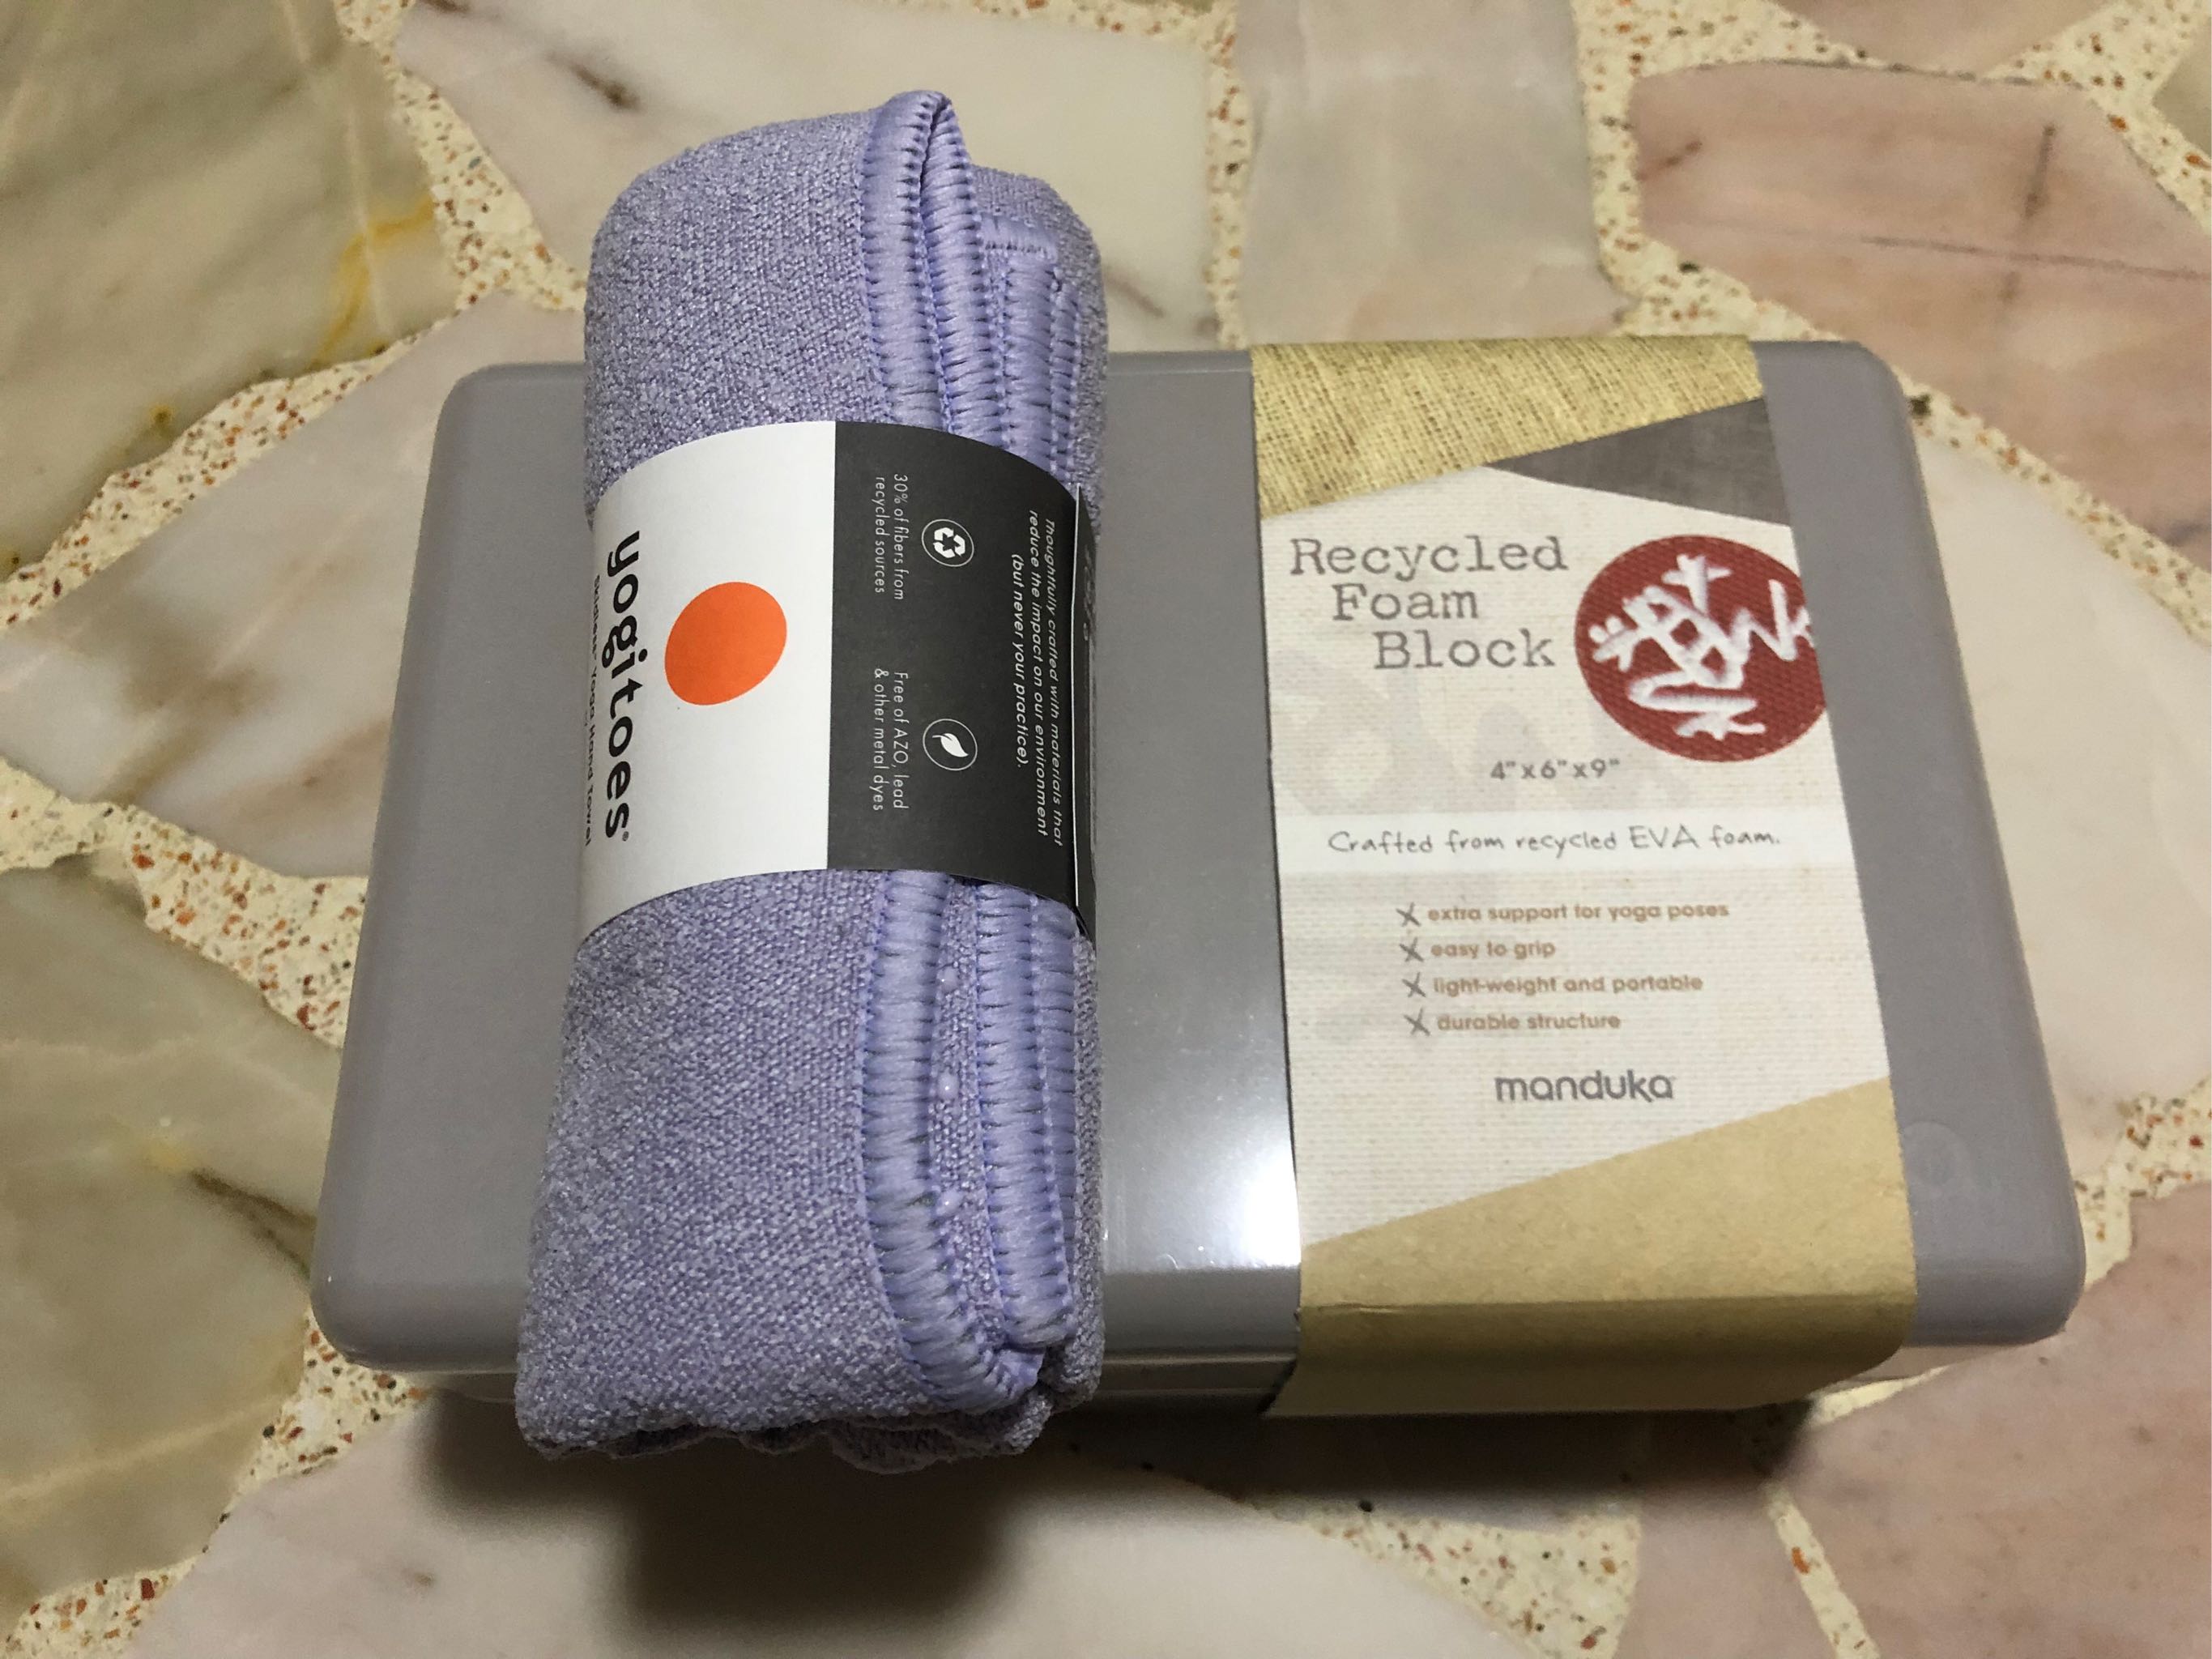 Manduka eQua Hand Towel - SS22 SS23